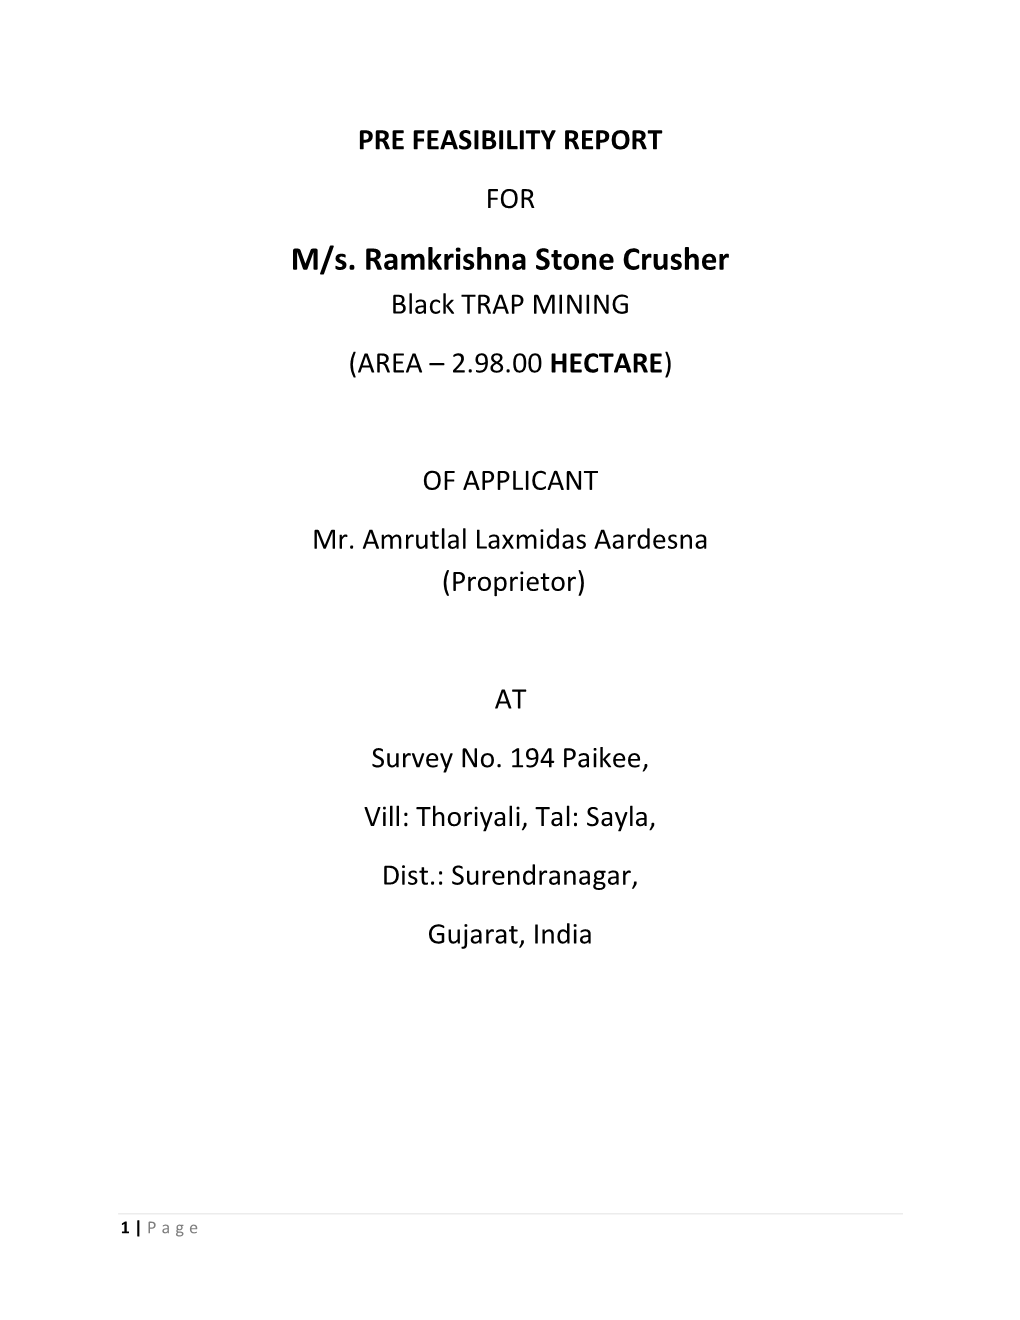 M/S. Ramkrishna Stone Crusher Black TRAP MINING (AREA – 2.98.00 HECTARE)